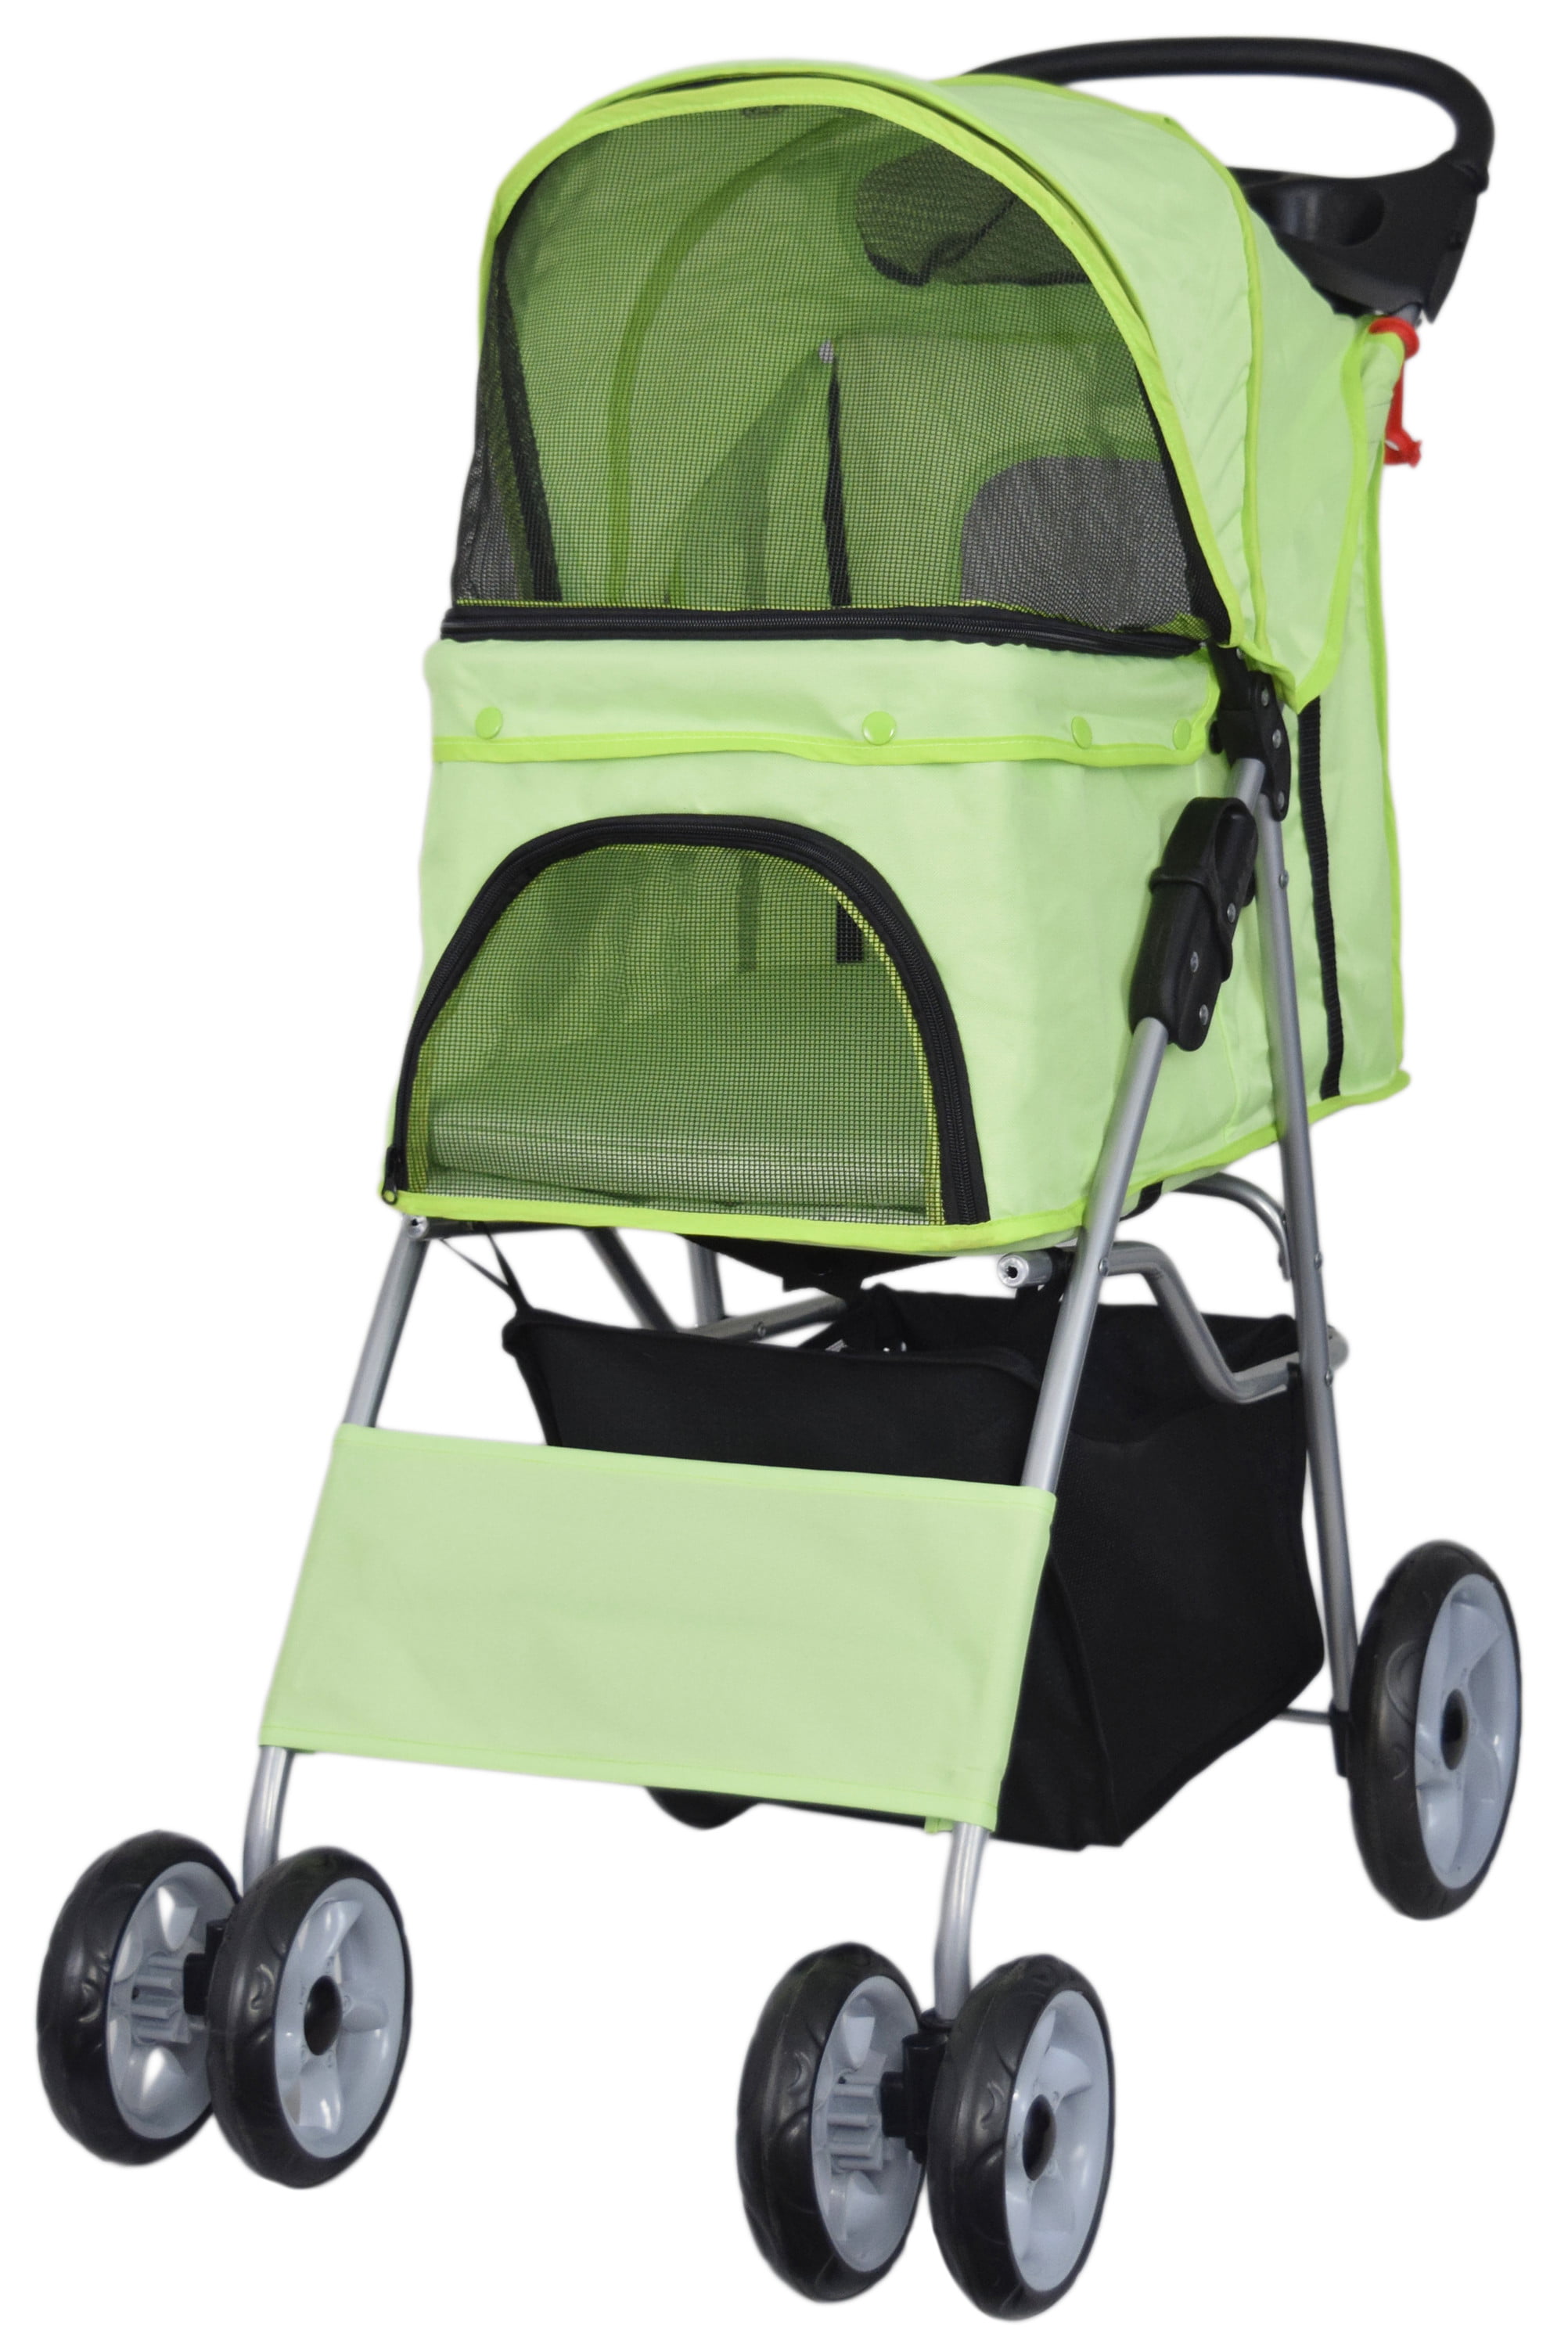 VIVO 4 Wheel Pet Stroller - Walmart.com